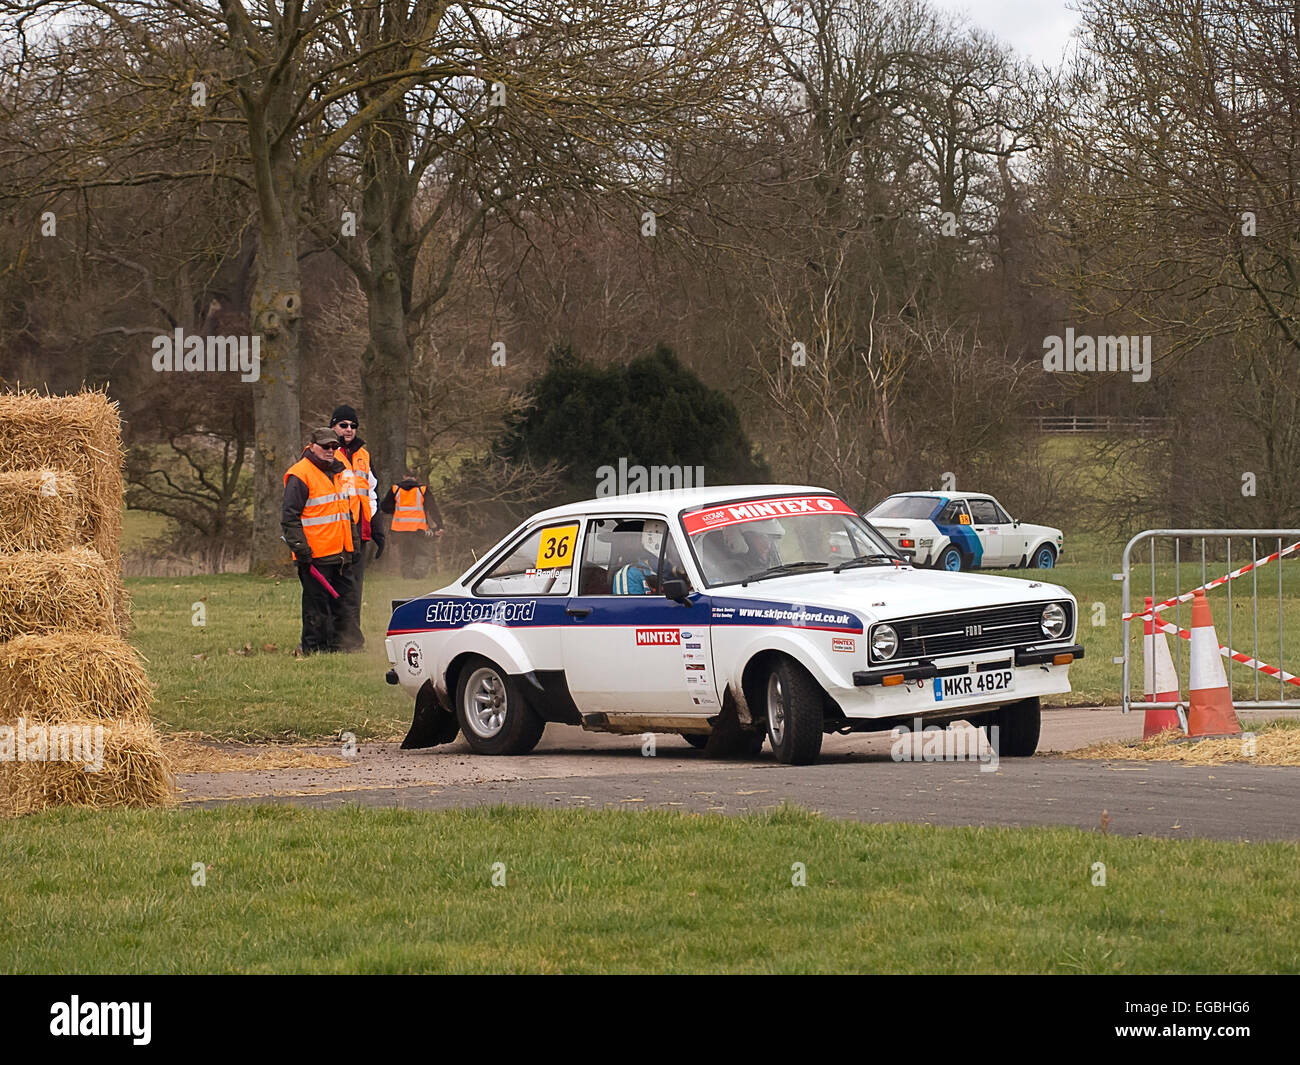 Warwickshire, UK. 21. Februar 2015. Ford Escort MKII Rallye Auto auf Rennen Retro special stage 21.02.2015 Credit: Martyn Goddard/Alamy Live News Stockfoto